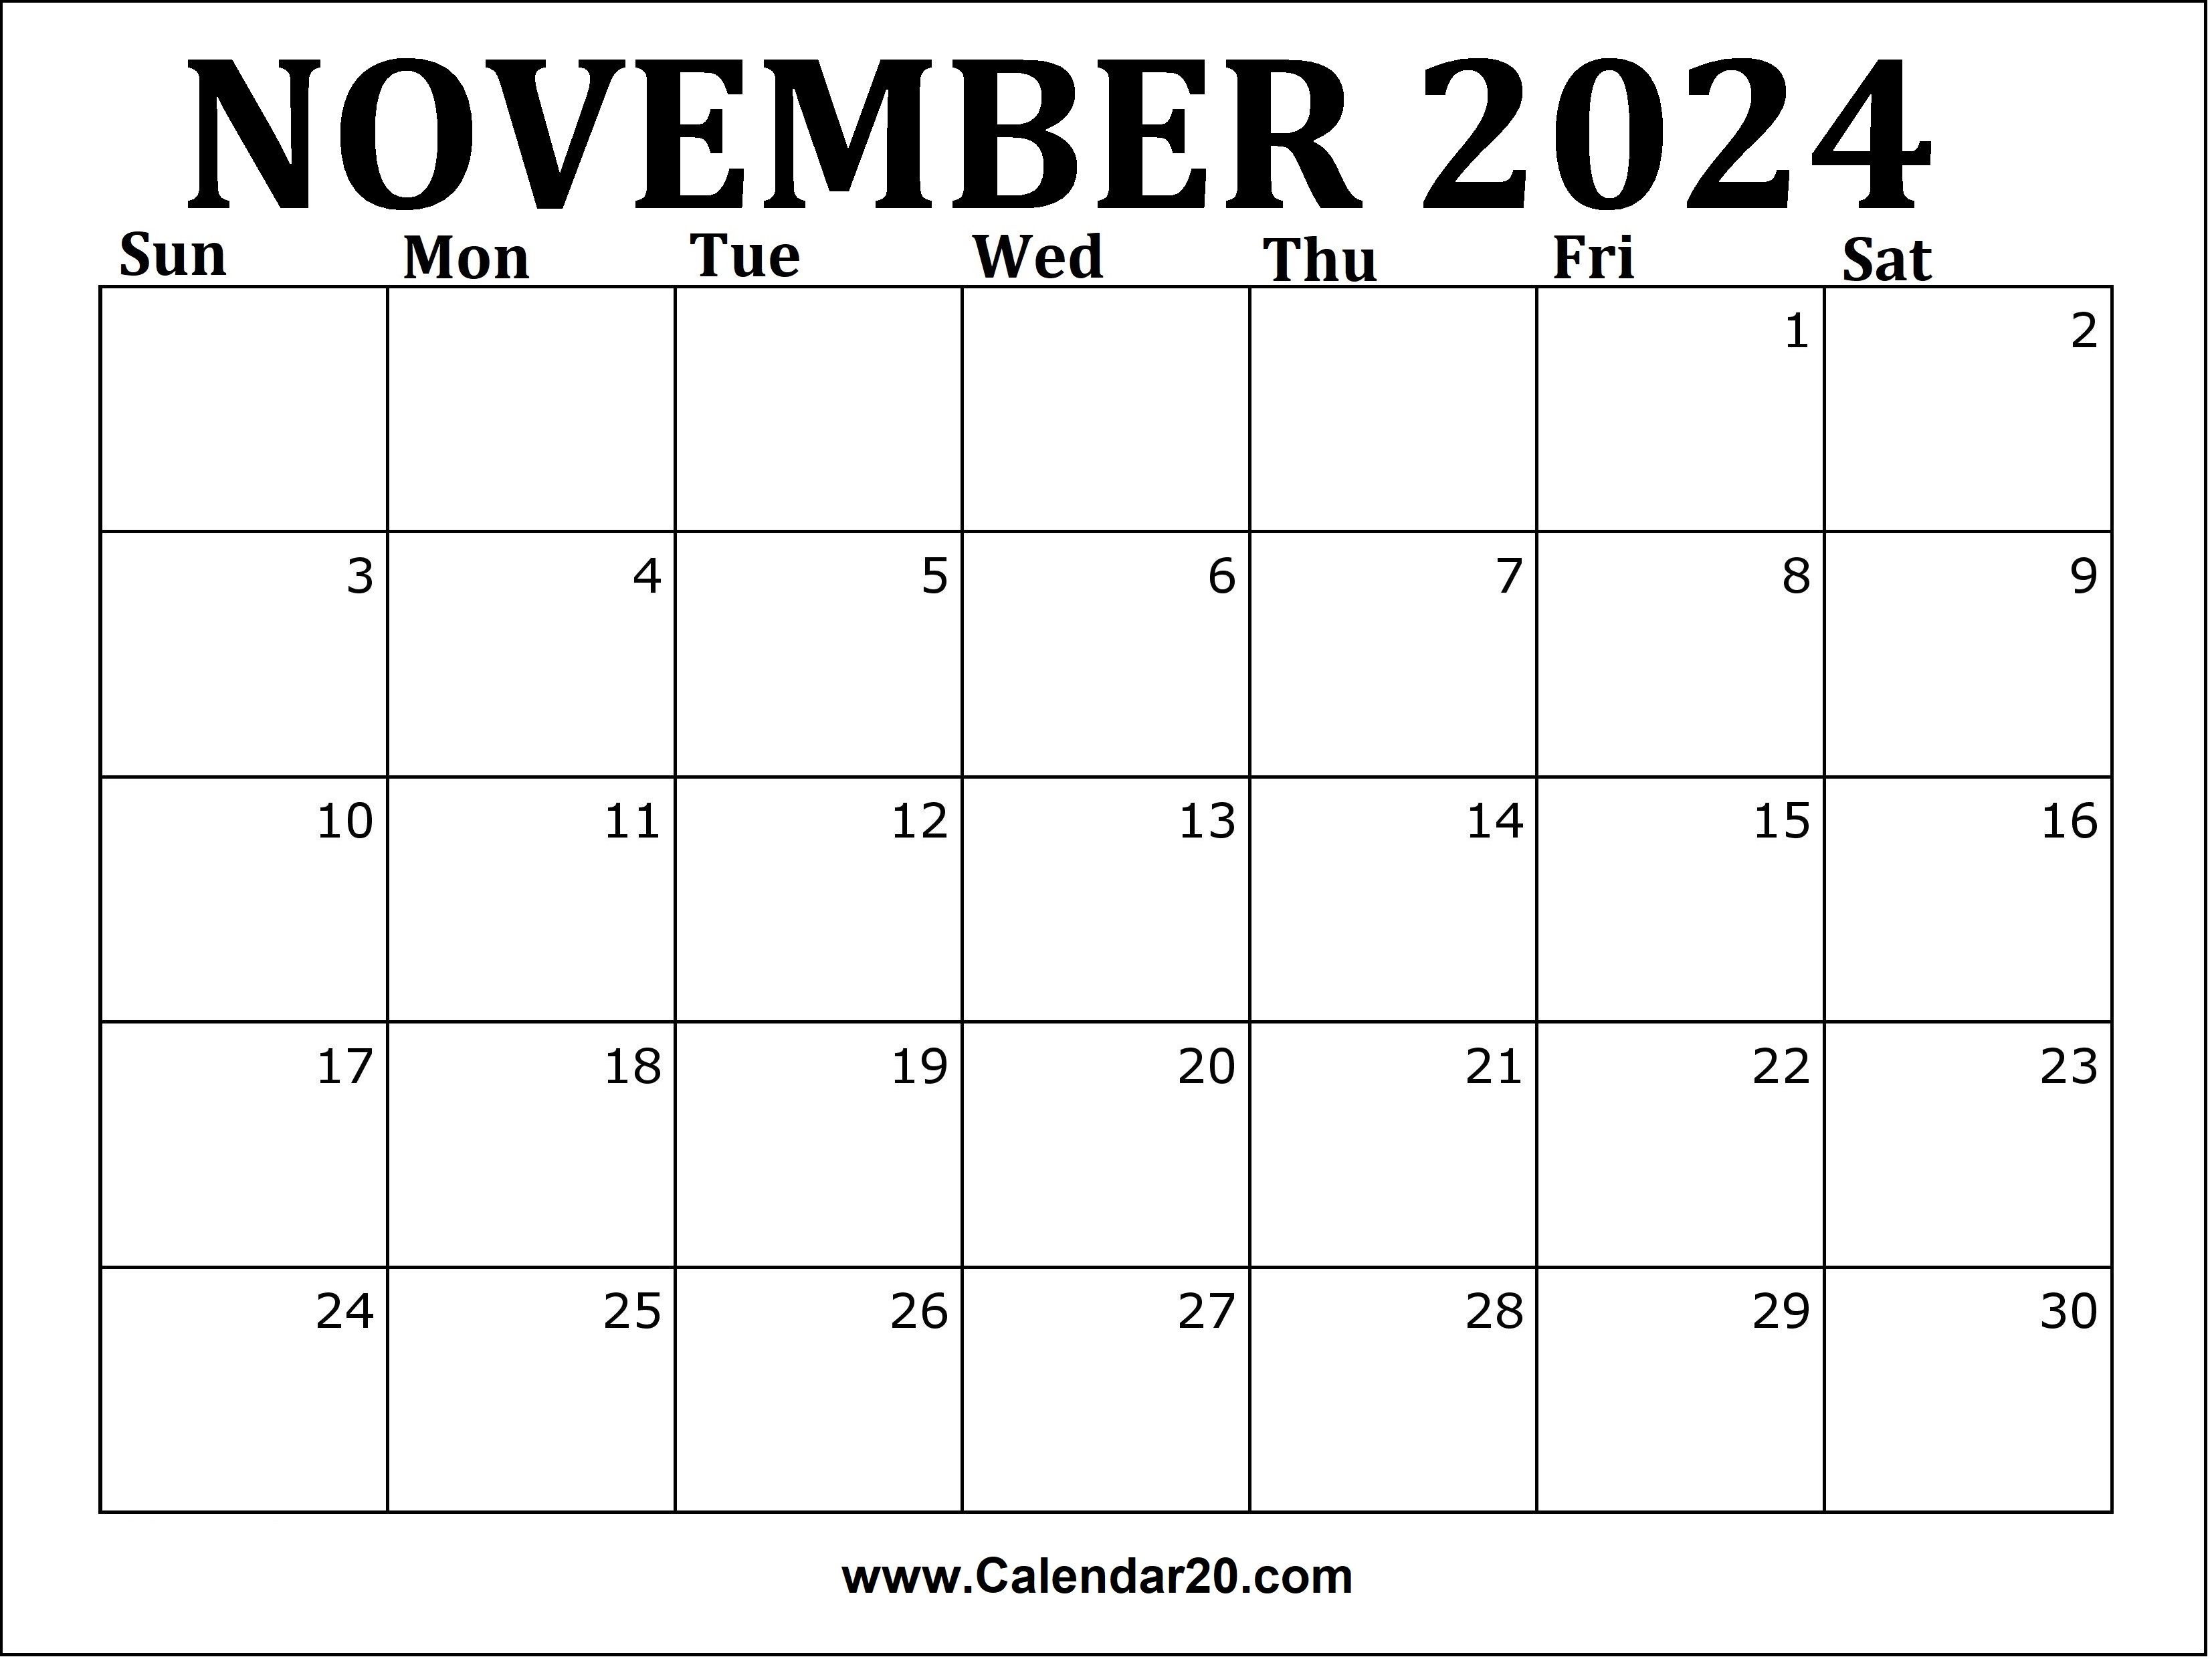 Livermore Calendar 2024 Edithe Merrile